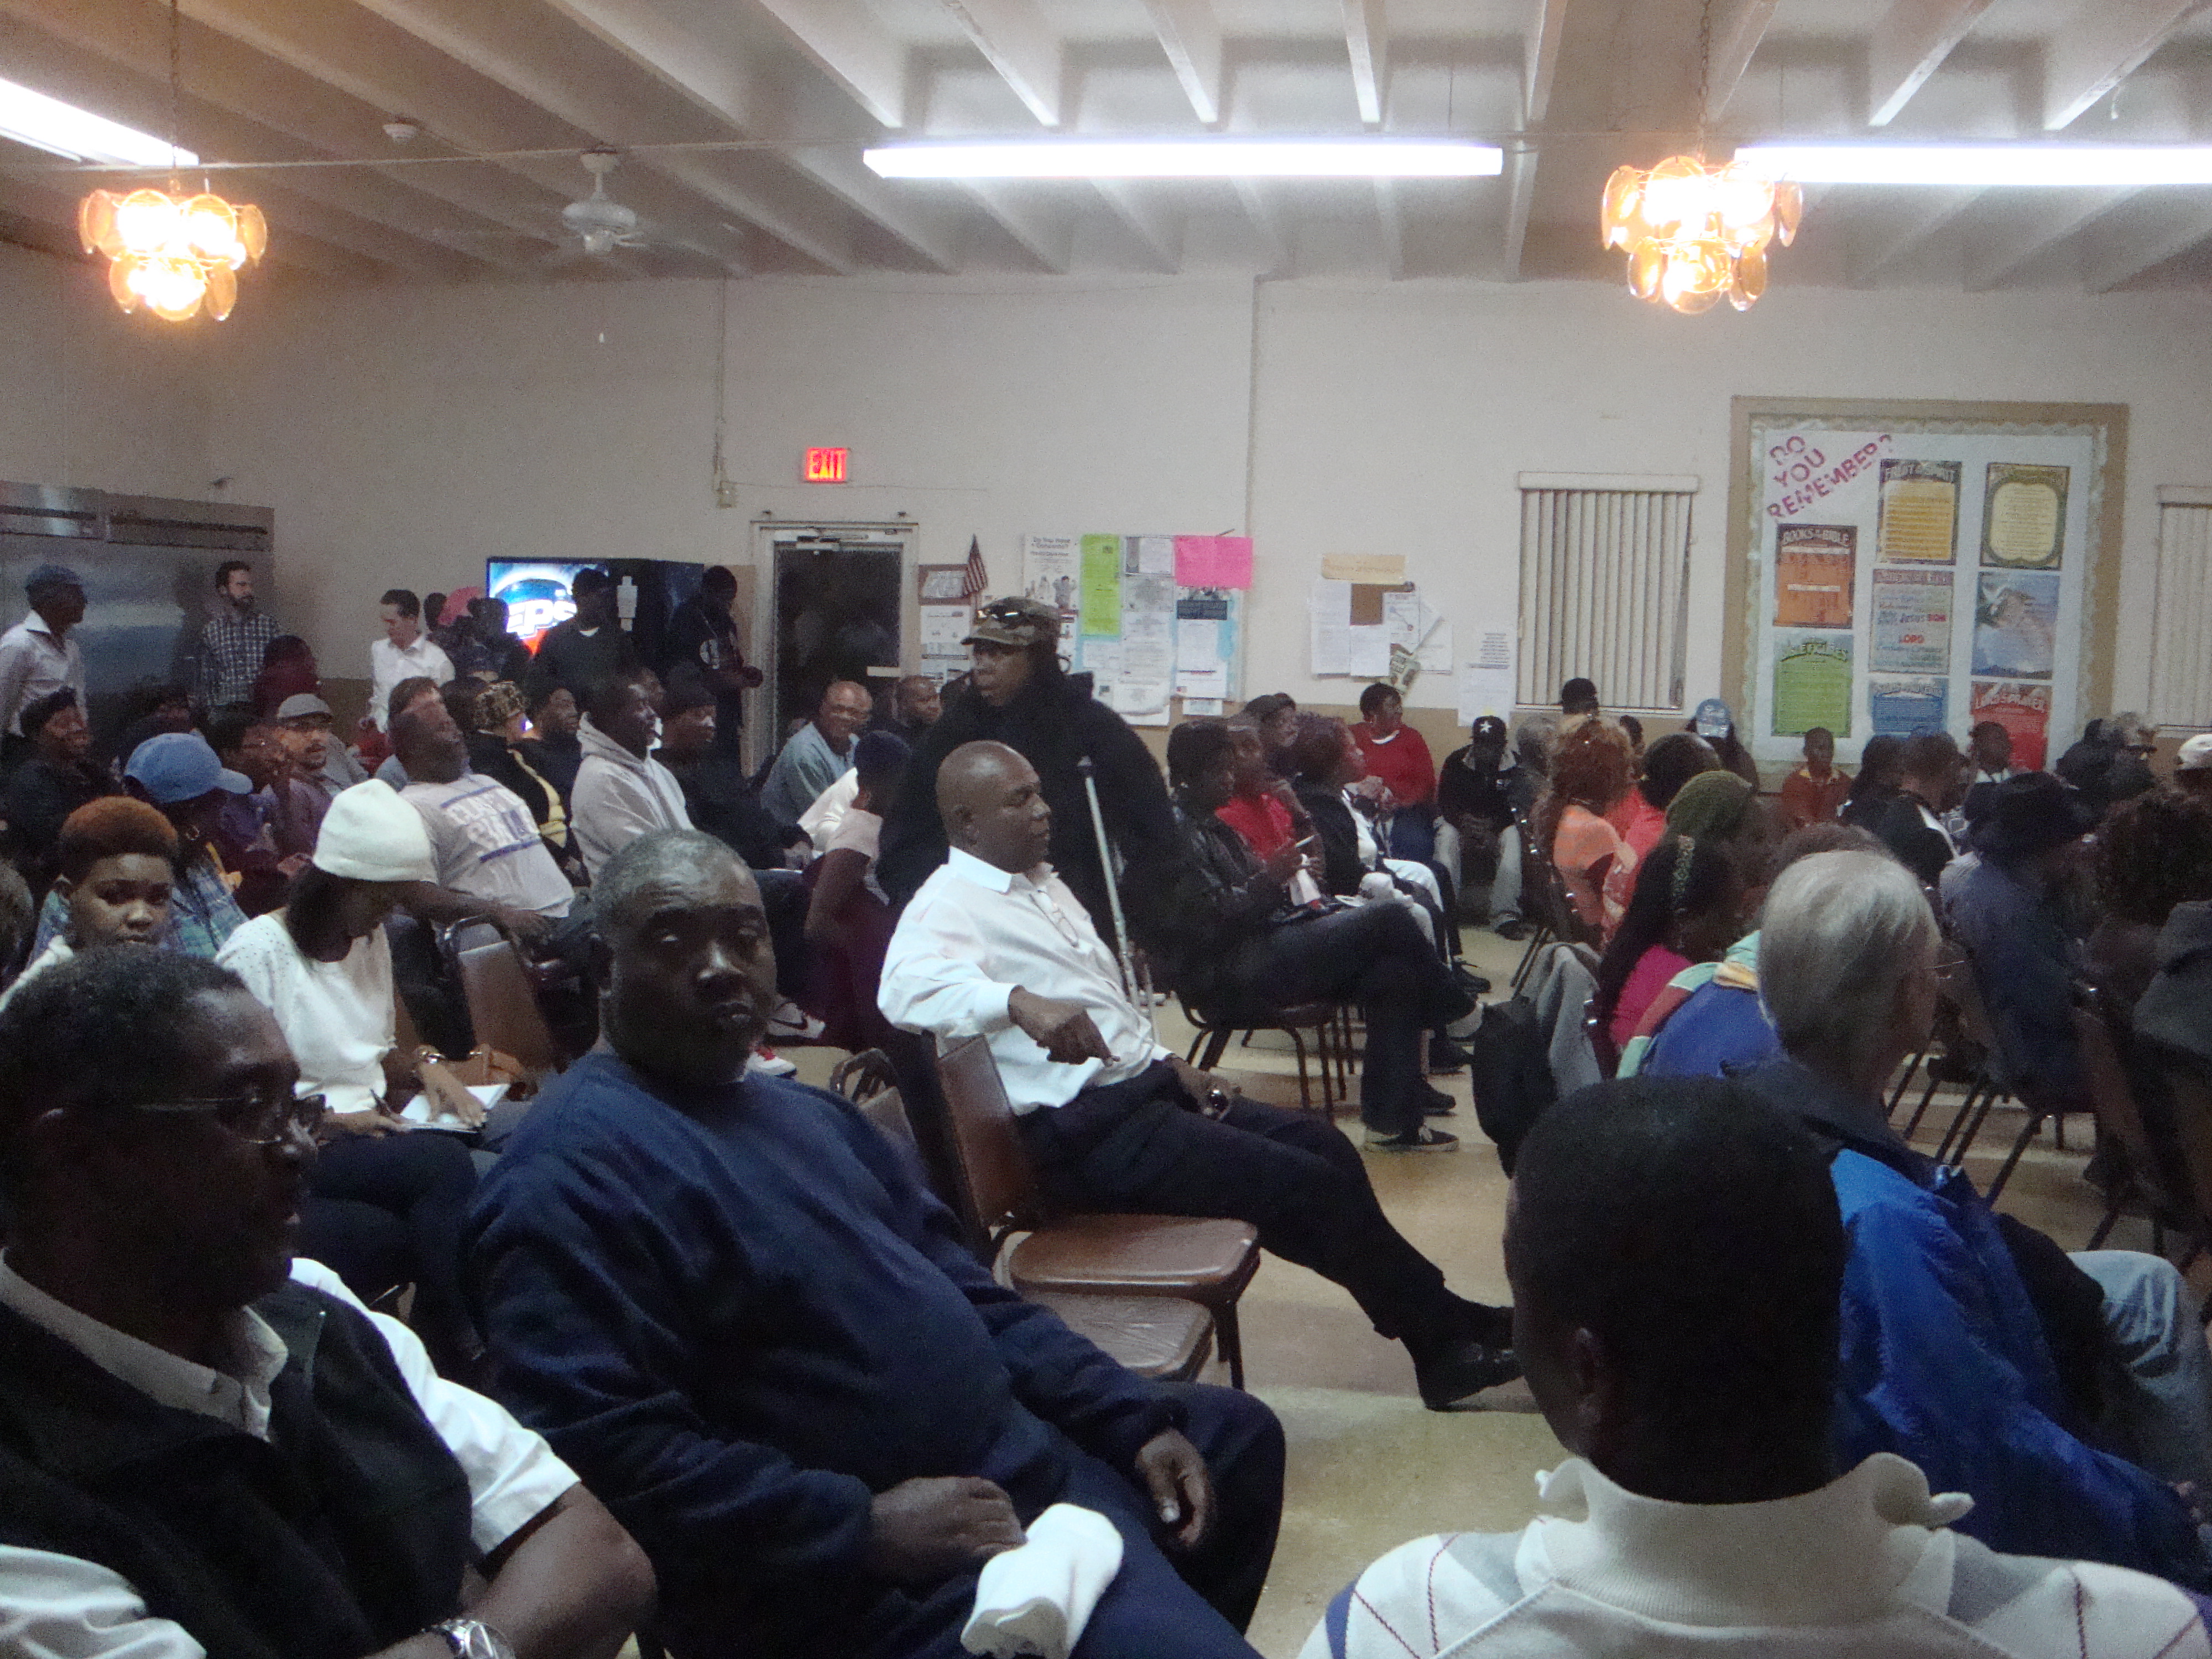 Community forum at St. John Institutional Baptist Church